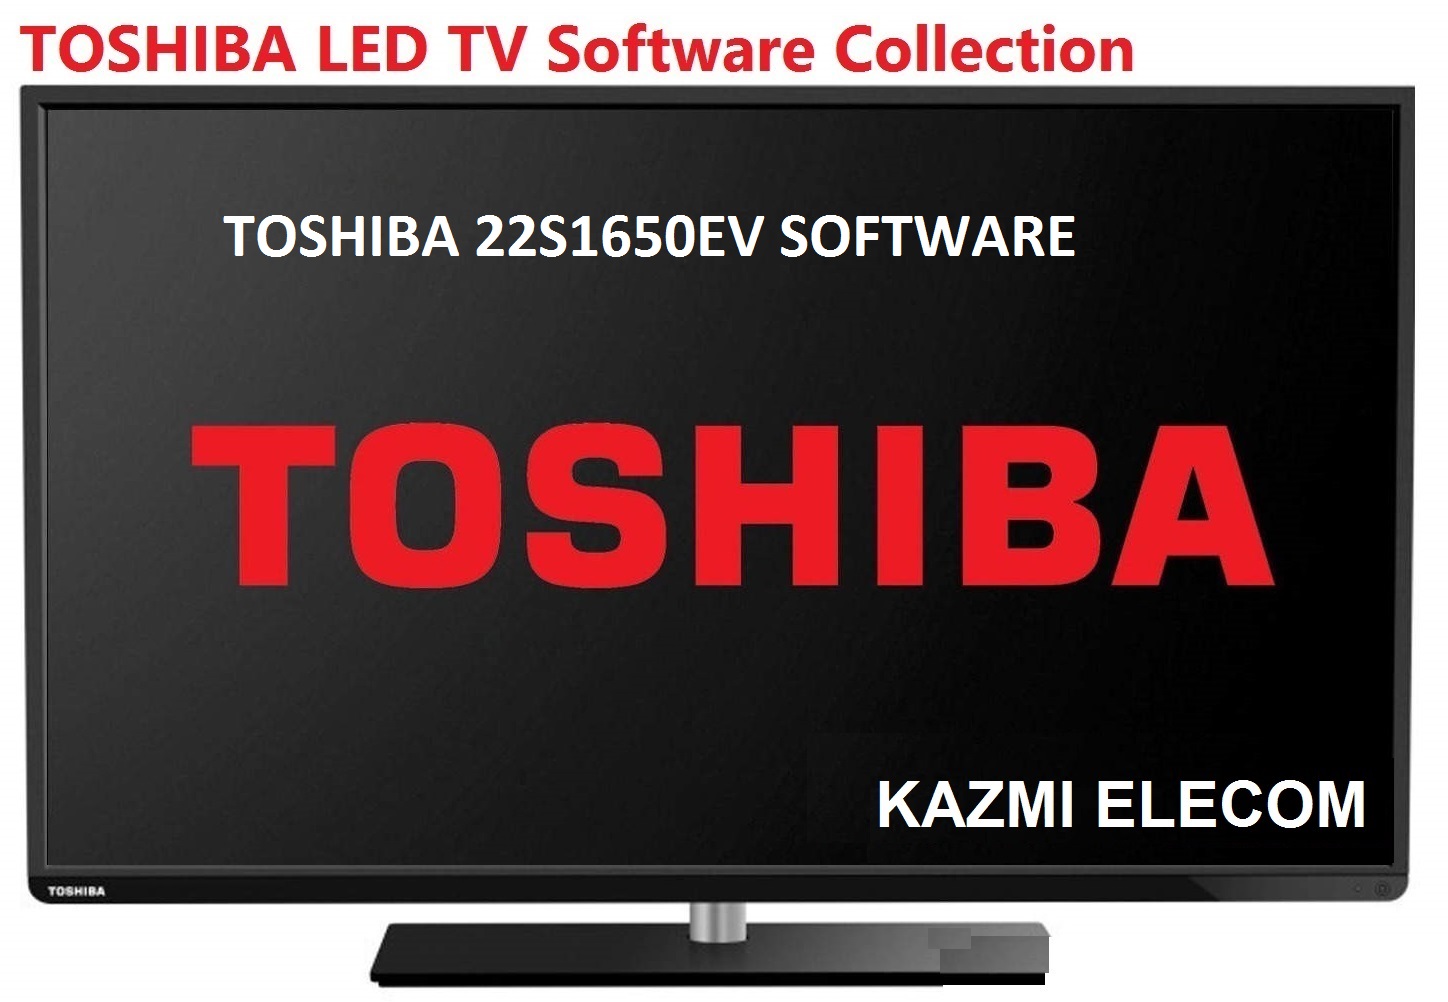 Toshiba 22S1650Ev